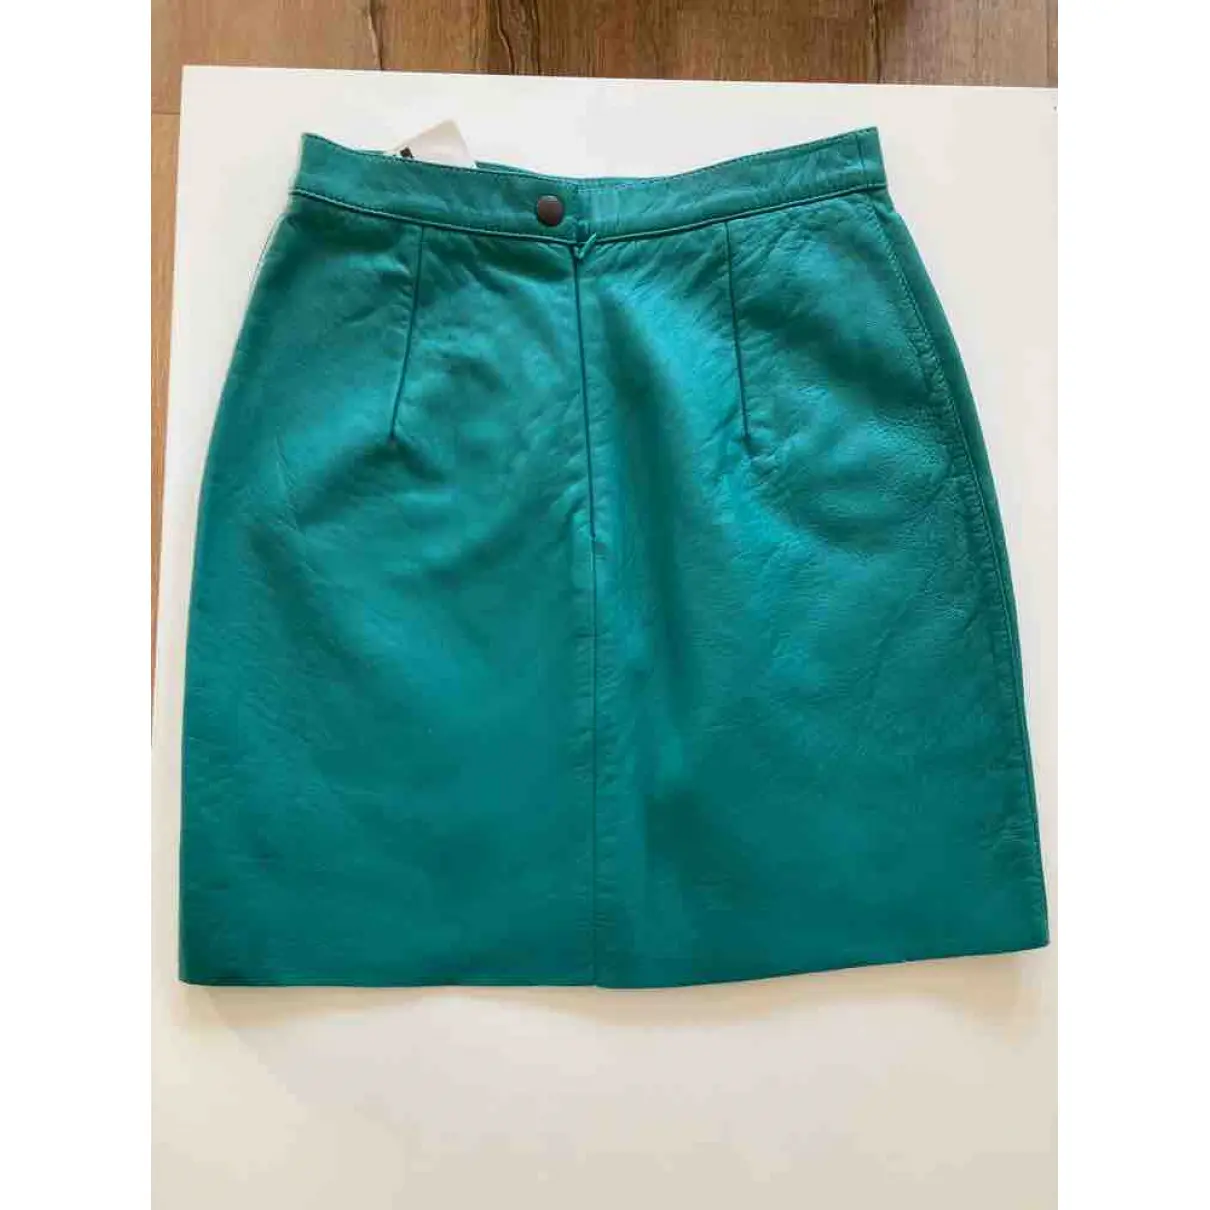 Buy American Apparel Leather mini skirt online